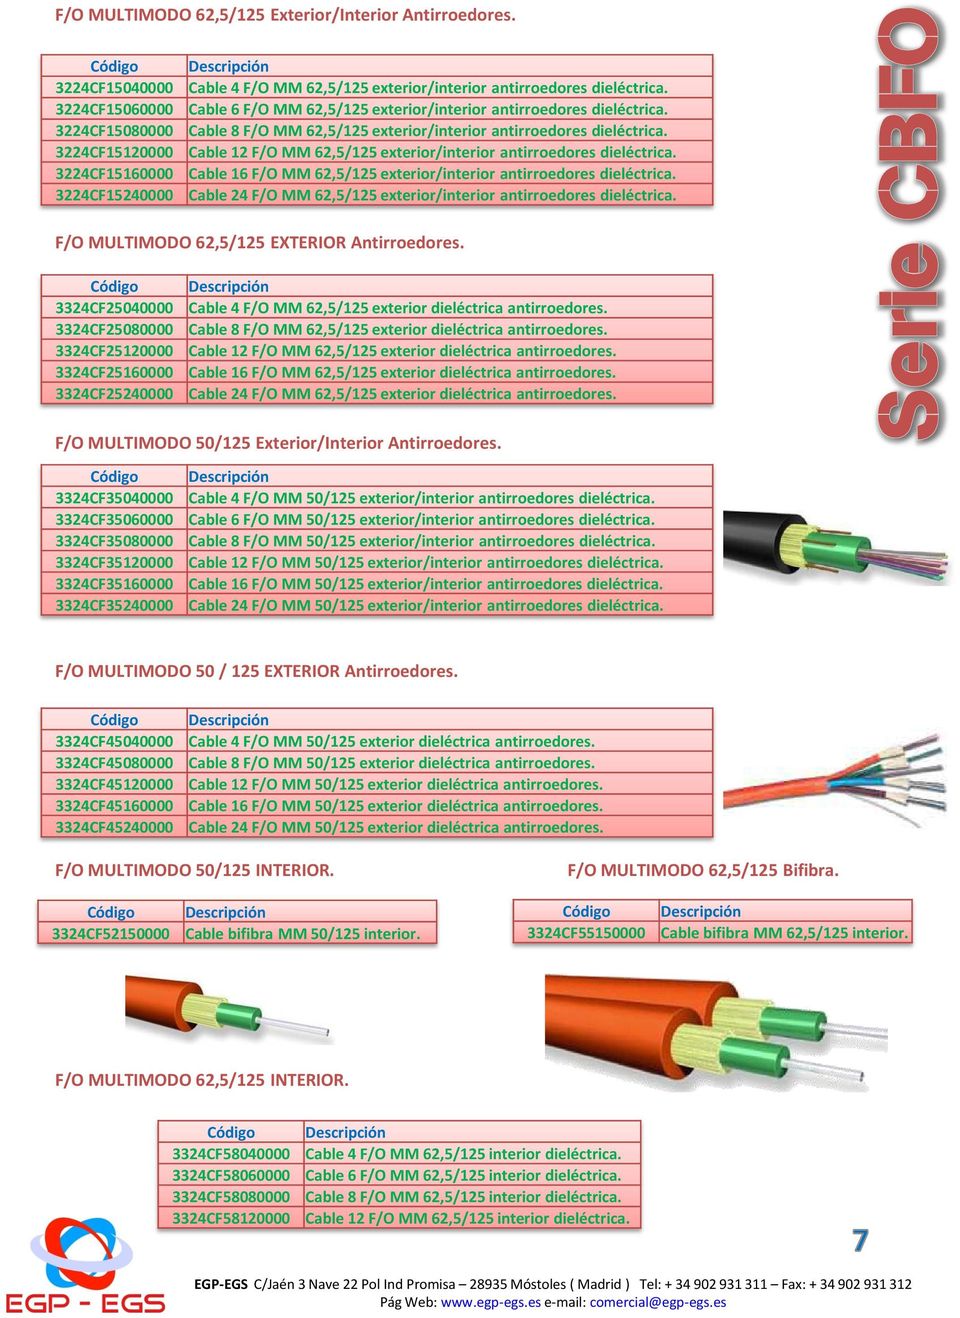 Cable 6 F/O MM 62,5/125 exterior/interior antirroedores dieléctrica. Cable 8 F/O MM 62,5/125 exterior/interior antirroedores dieléctrica.